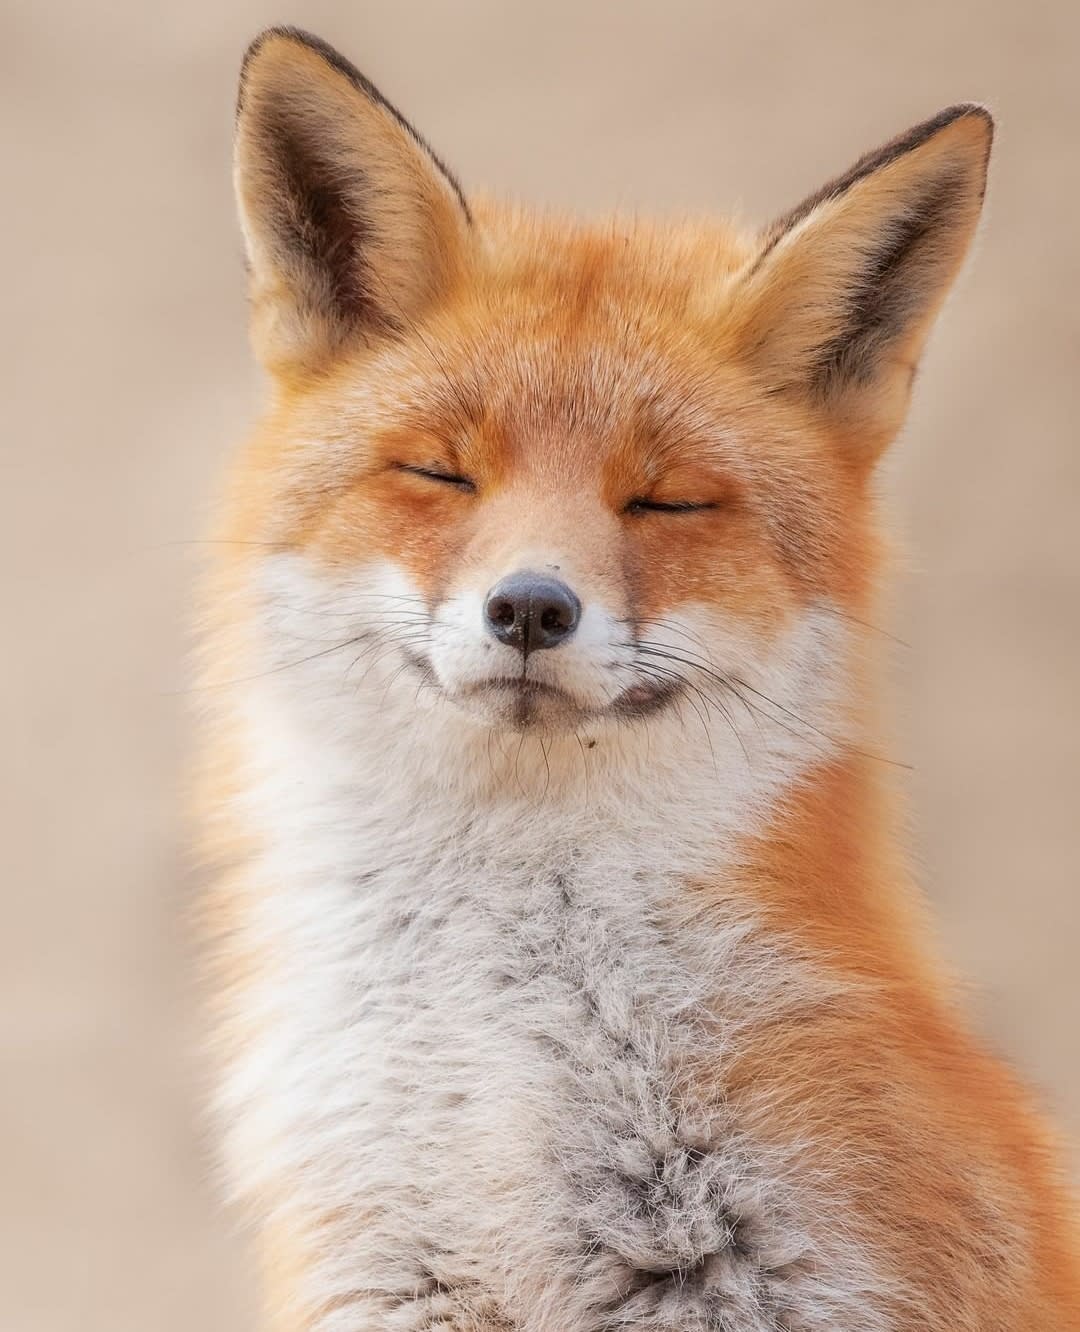 PsBattle: a resting fox